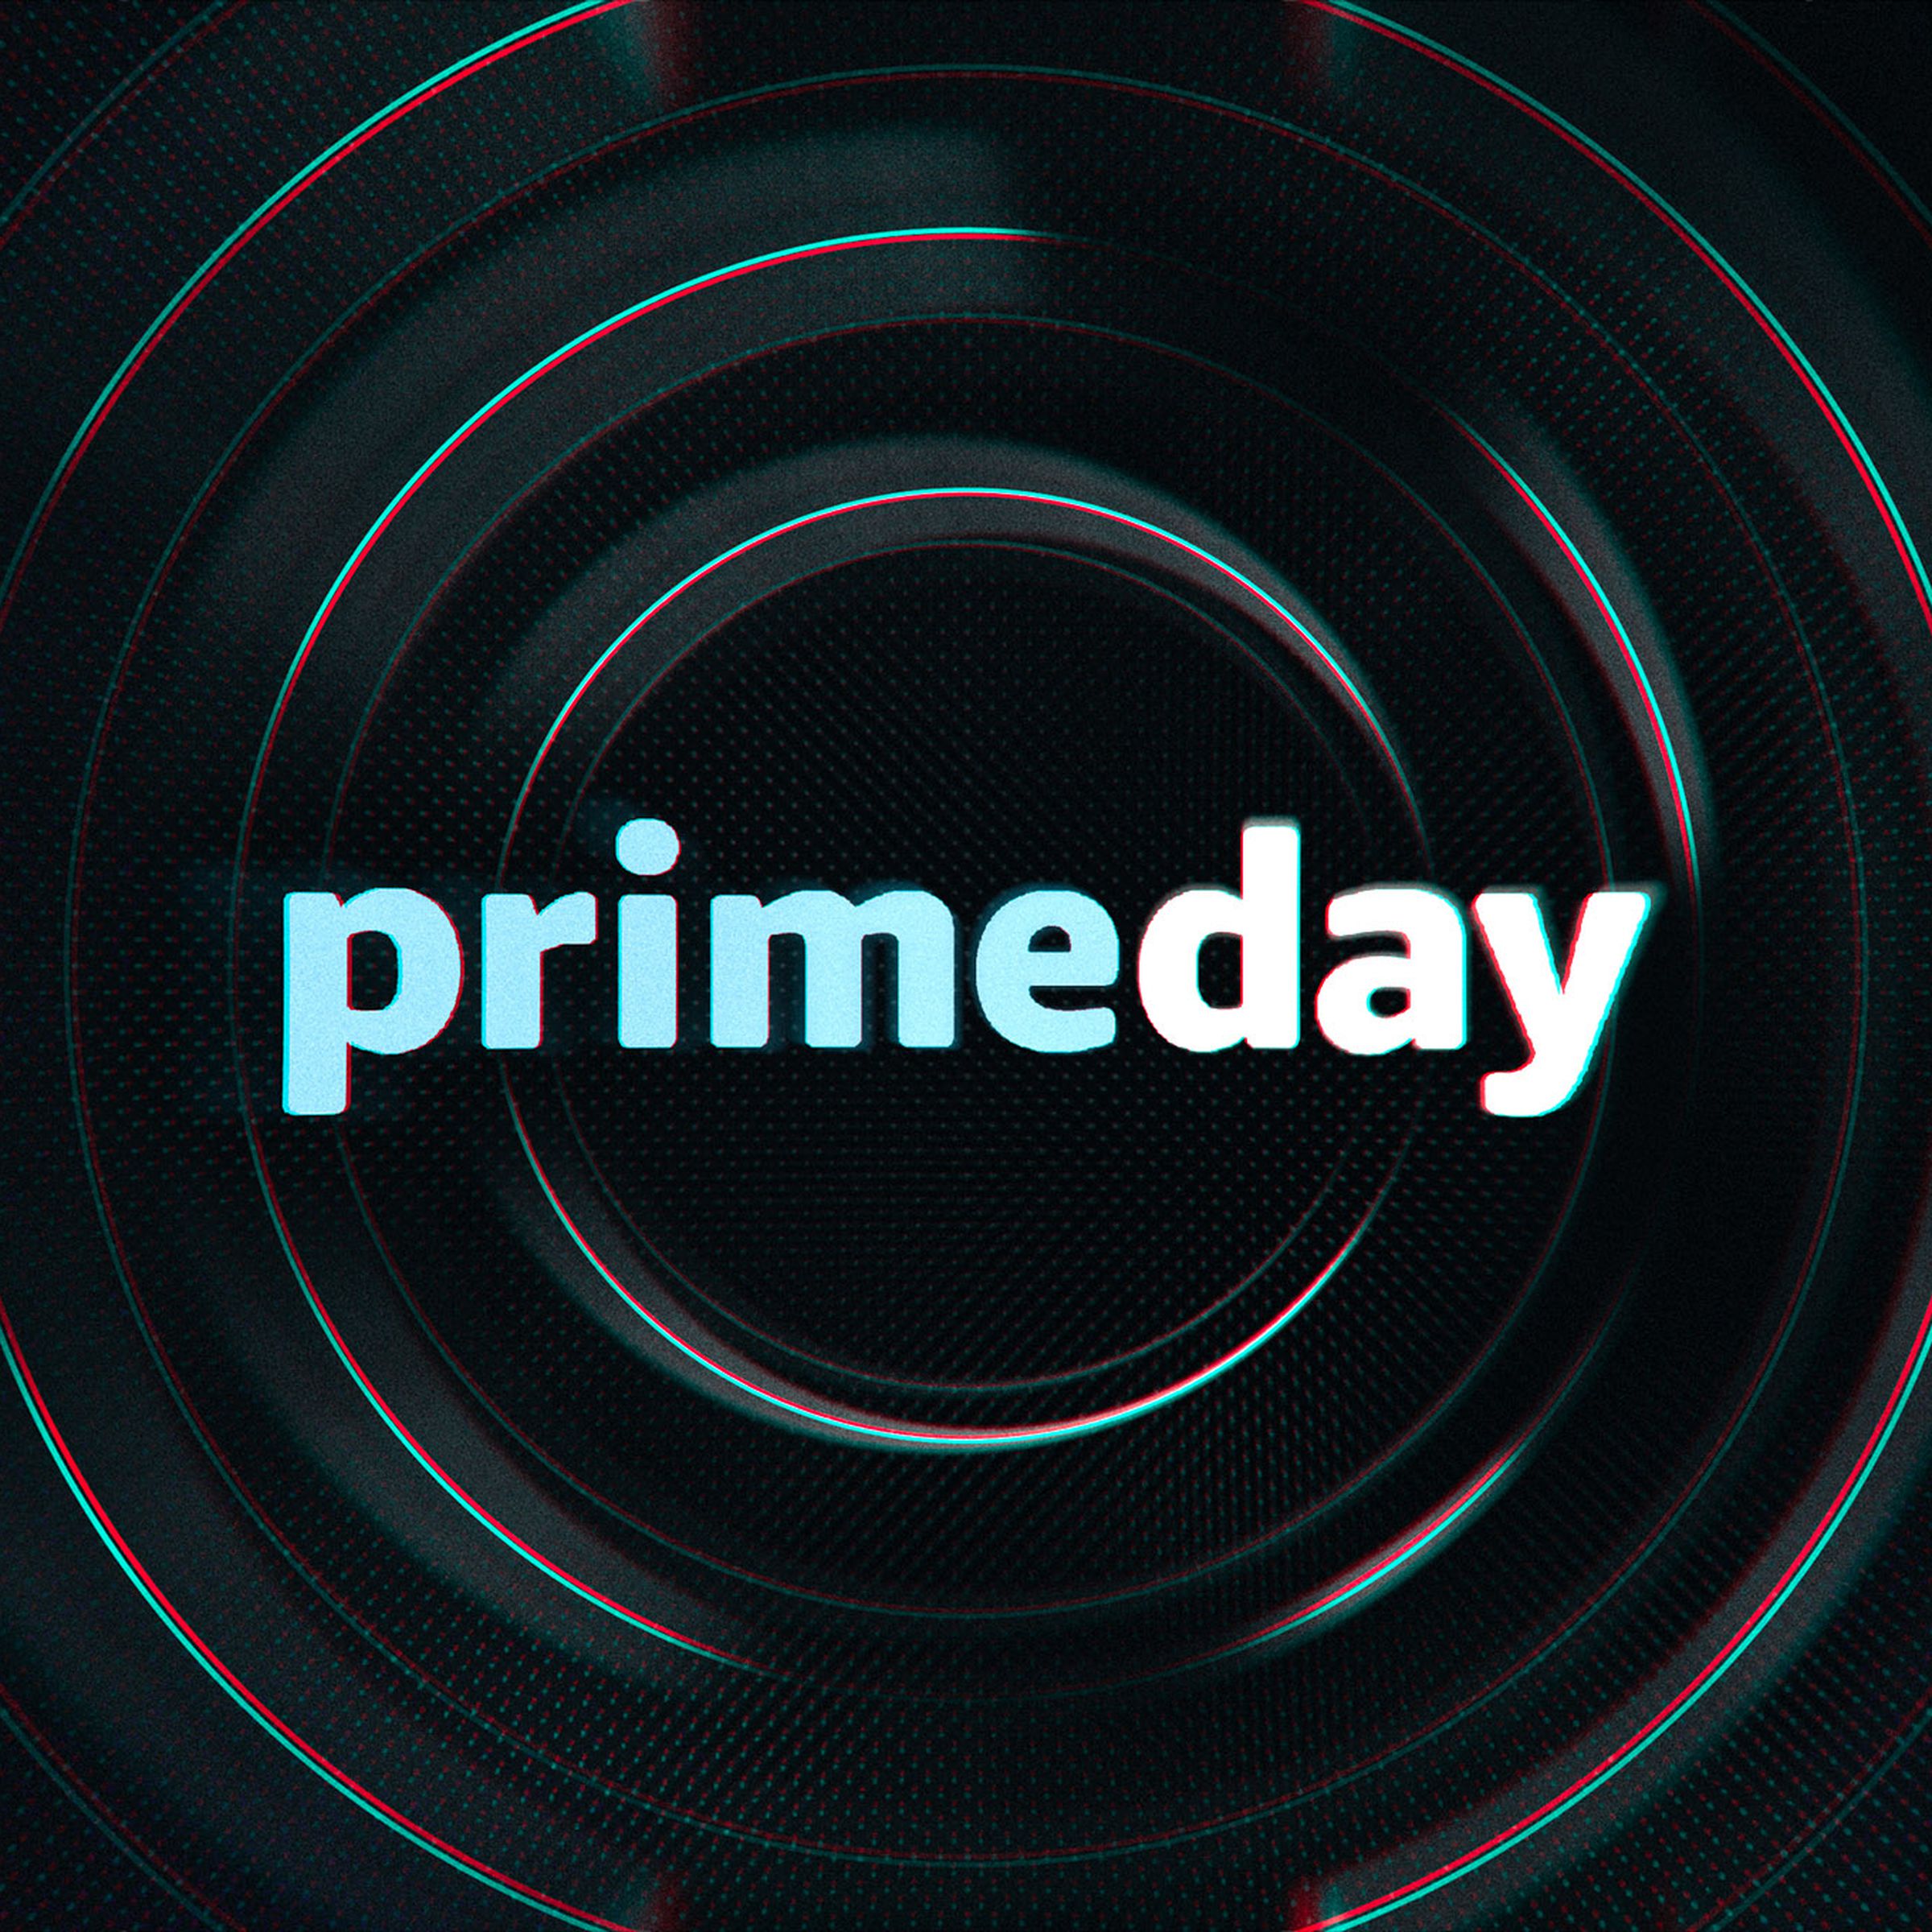 Amazon Prime Day logo on black background